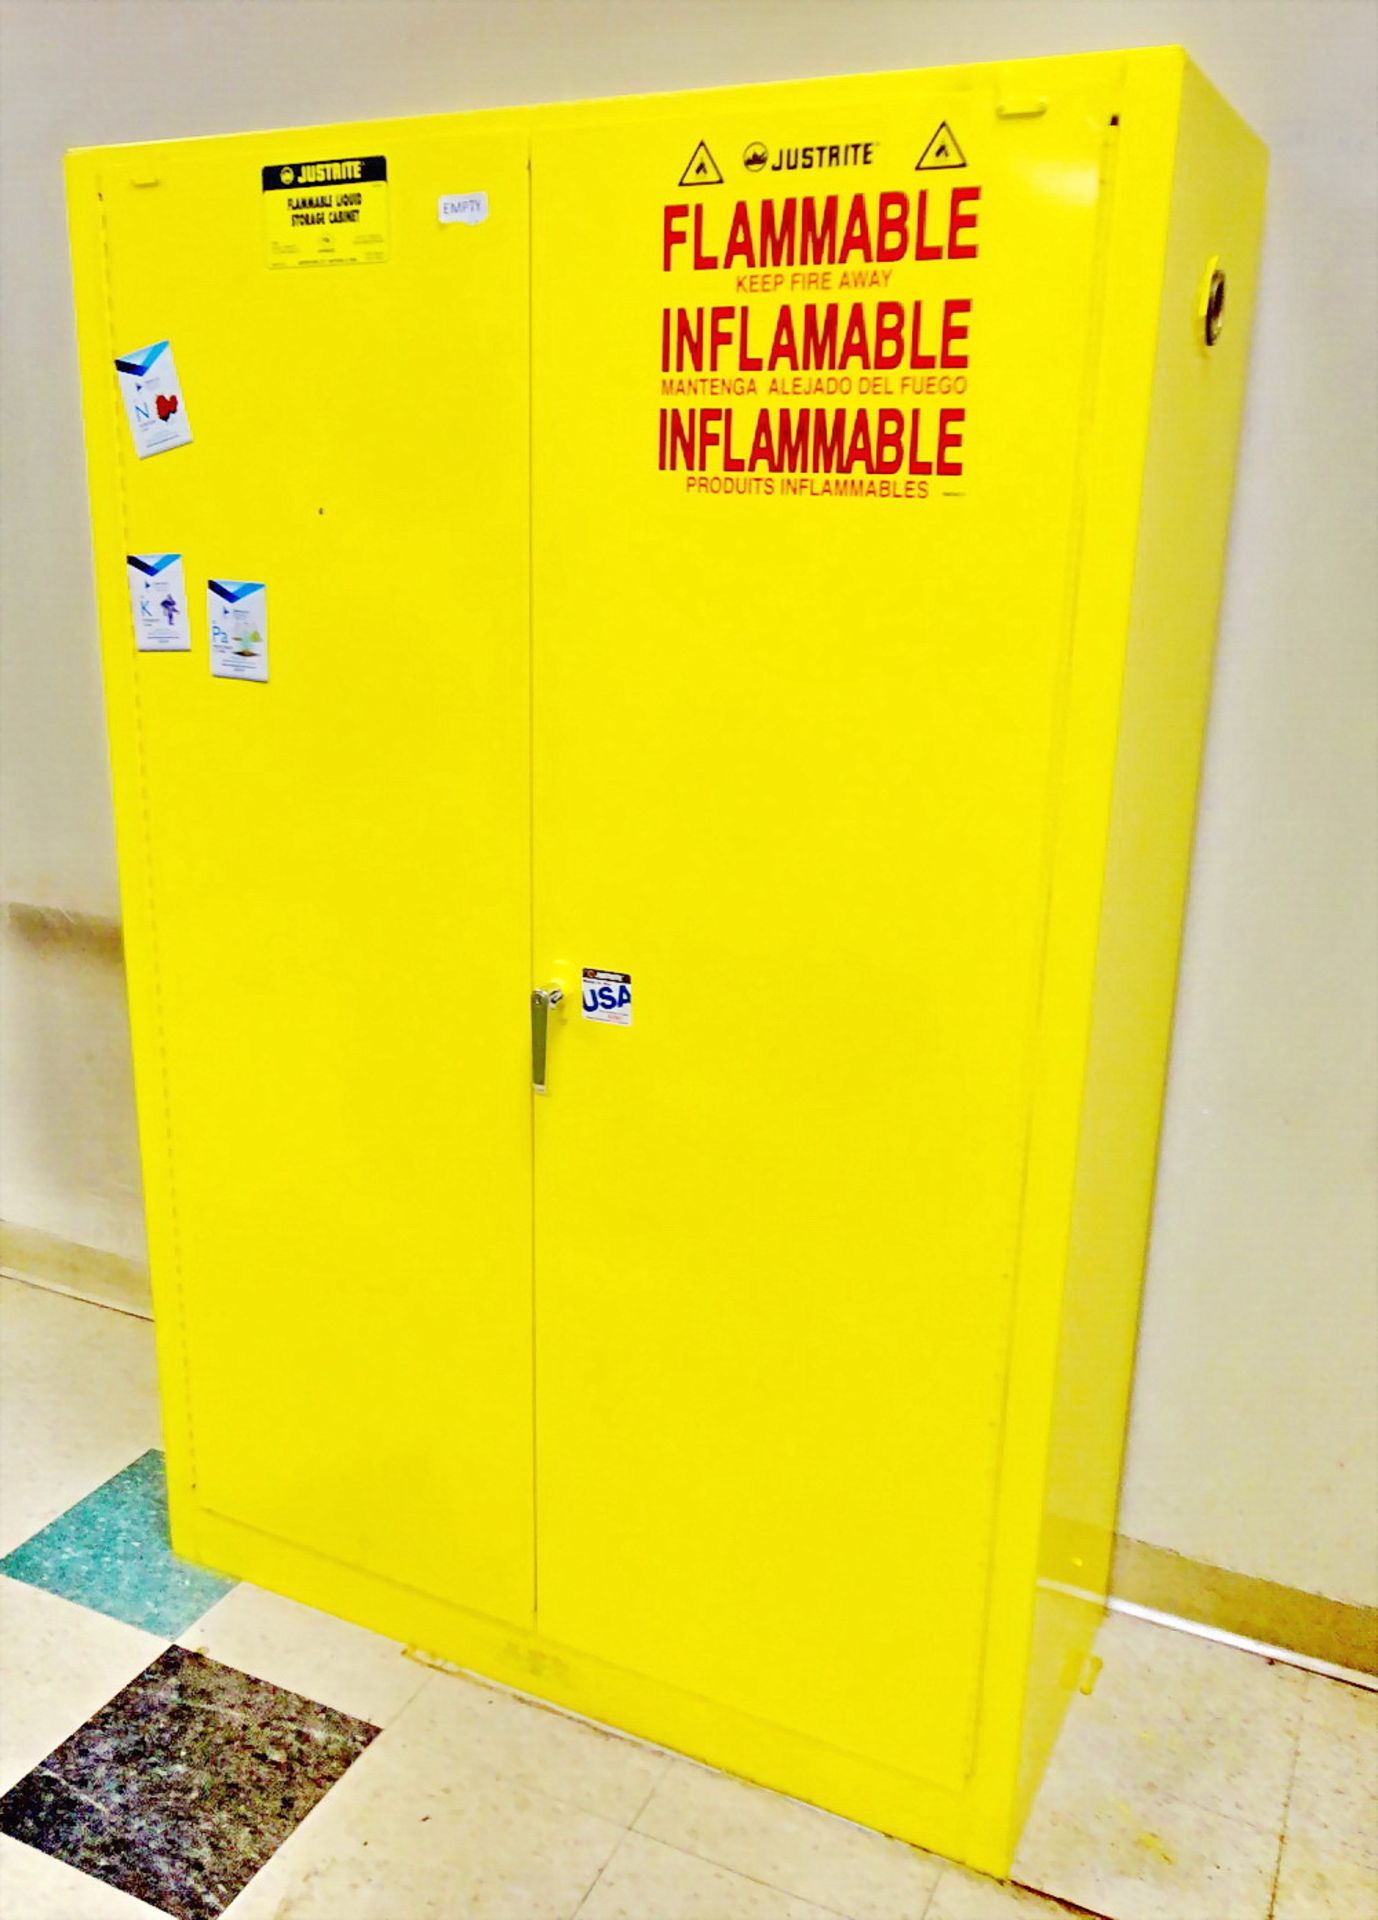 Justrite Flammable Storage Cabinet, 45 gallon